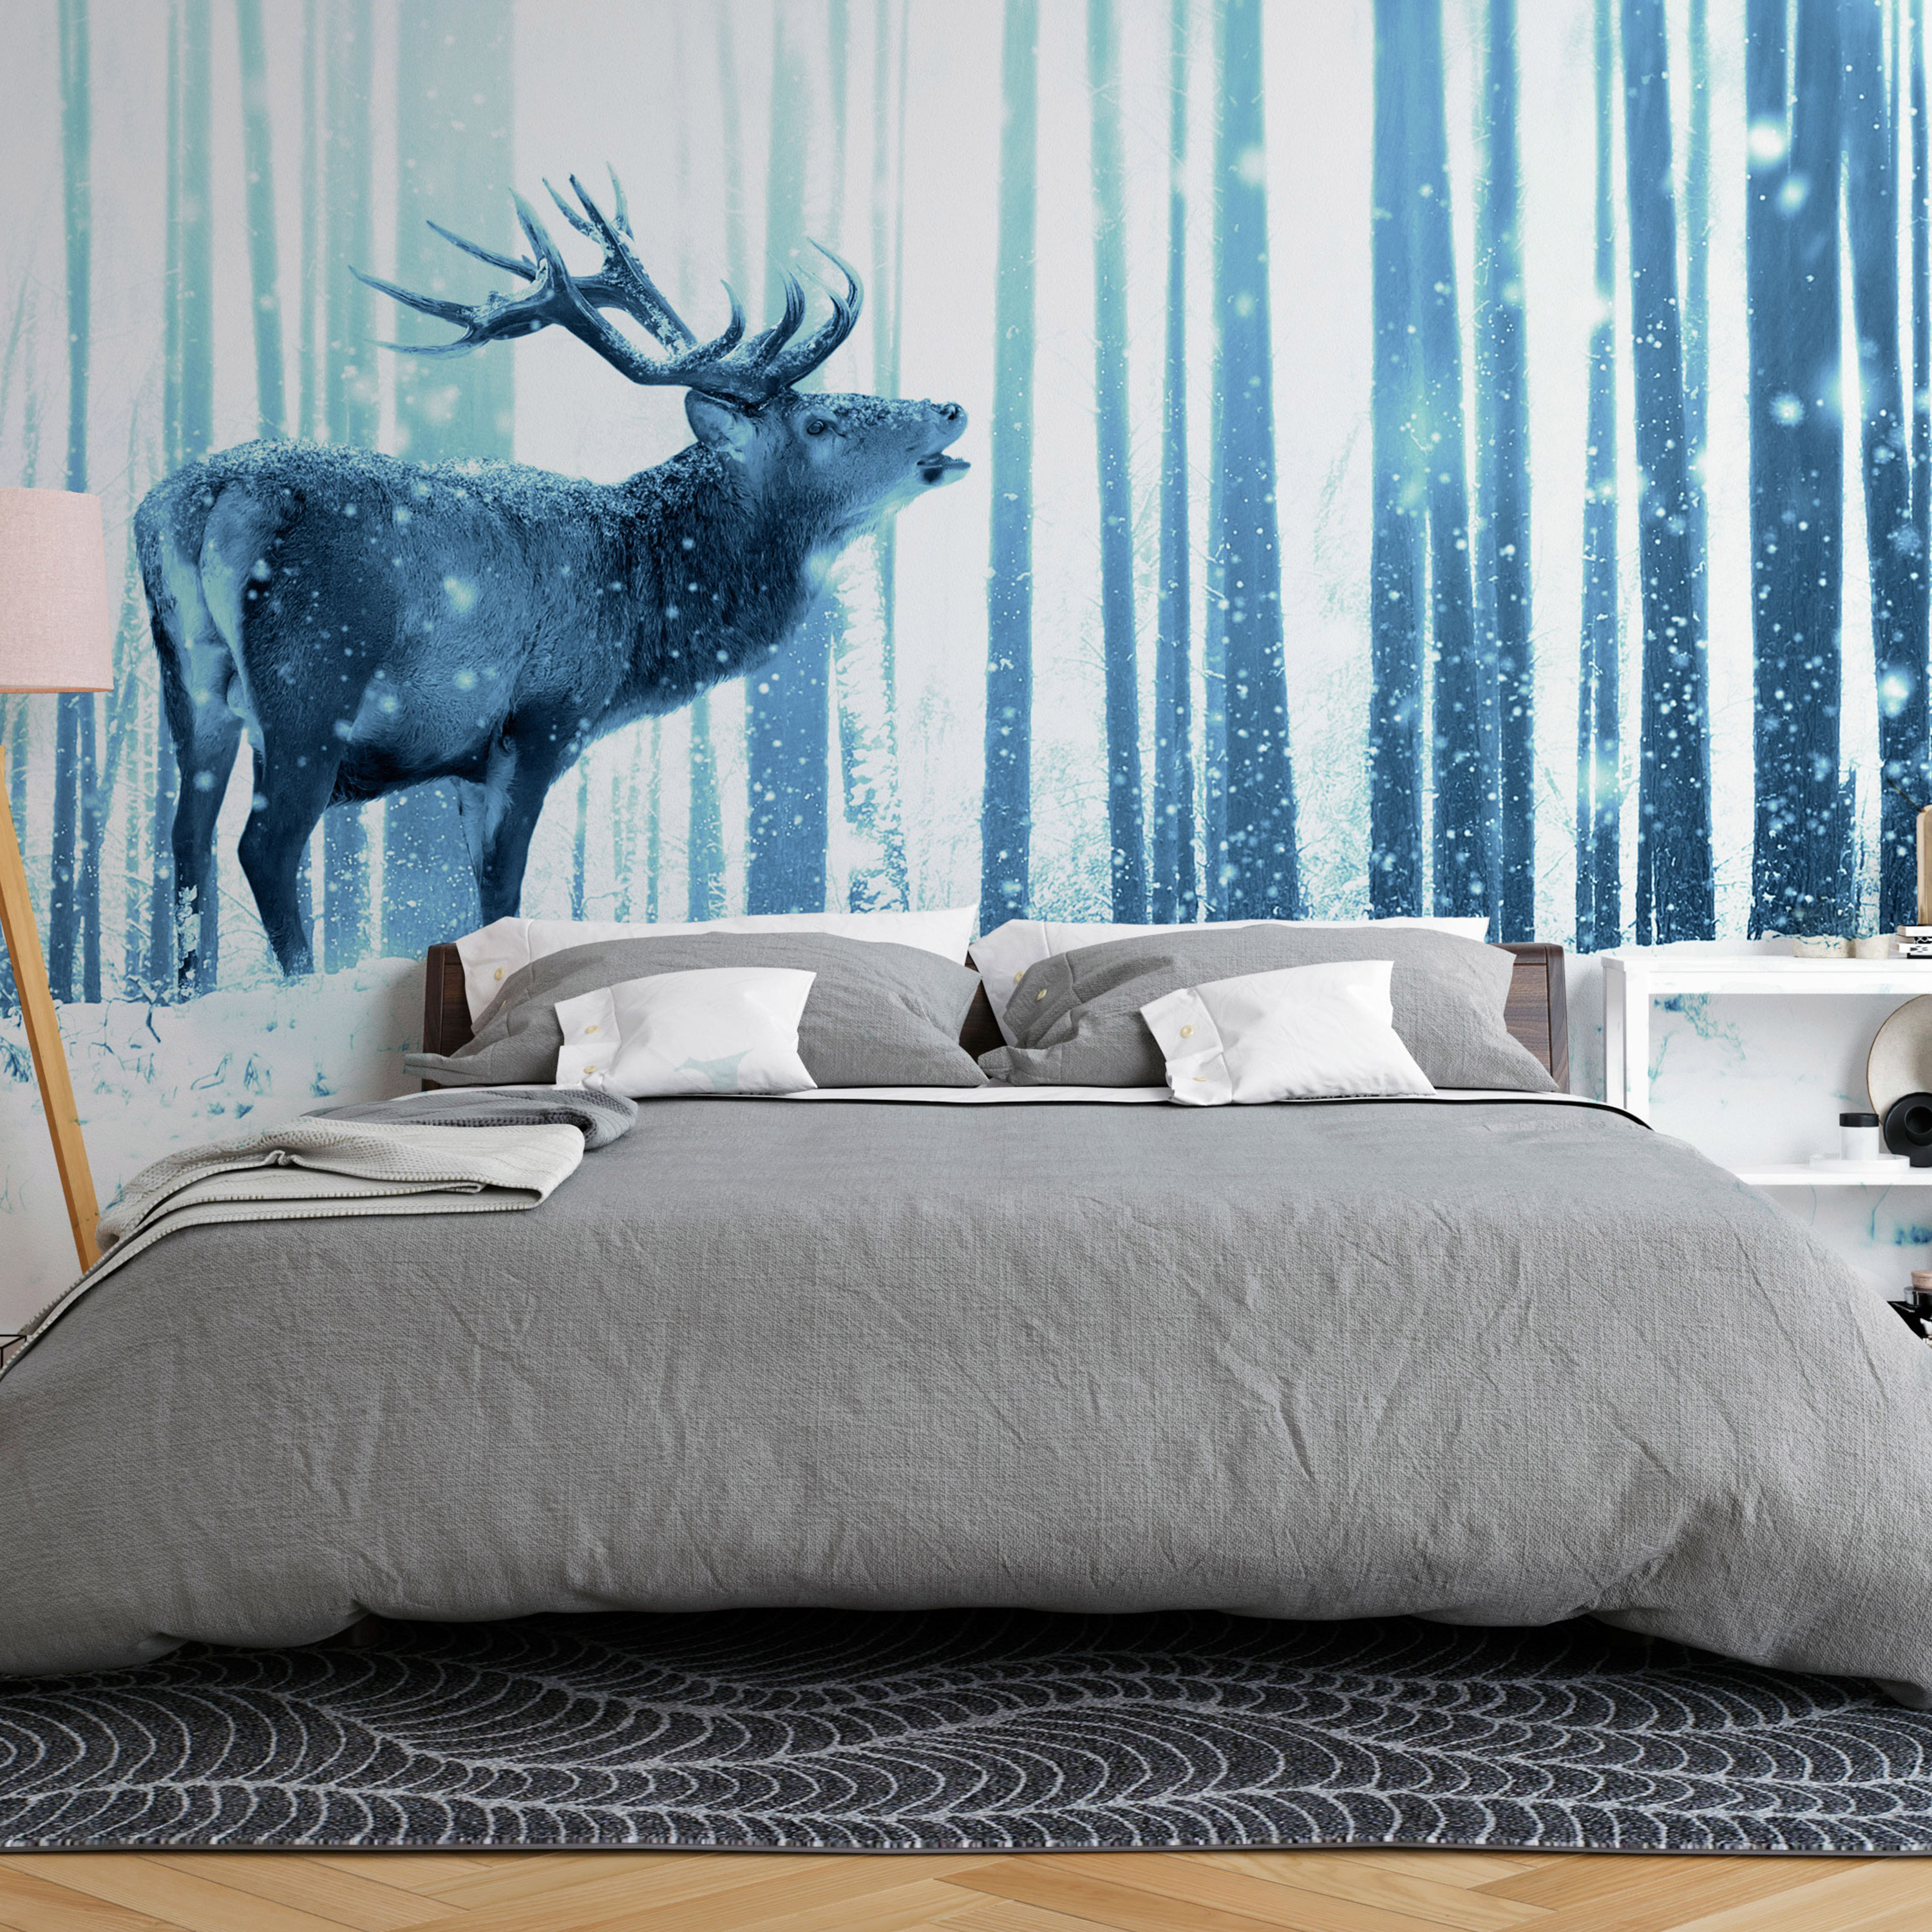 Self-adhesive Wallpaper - Deer in the Snow (Blue) - 196x140